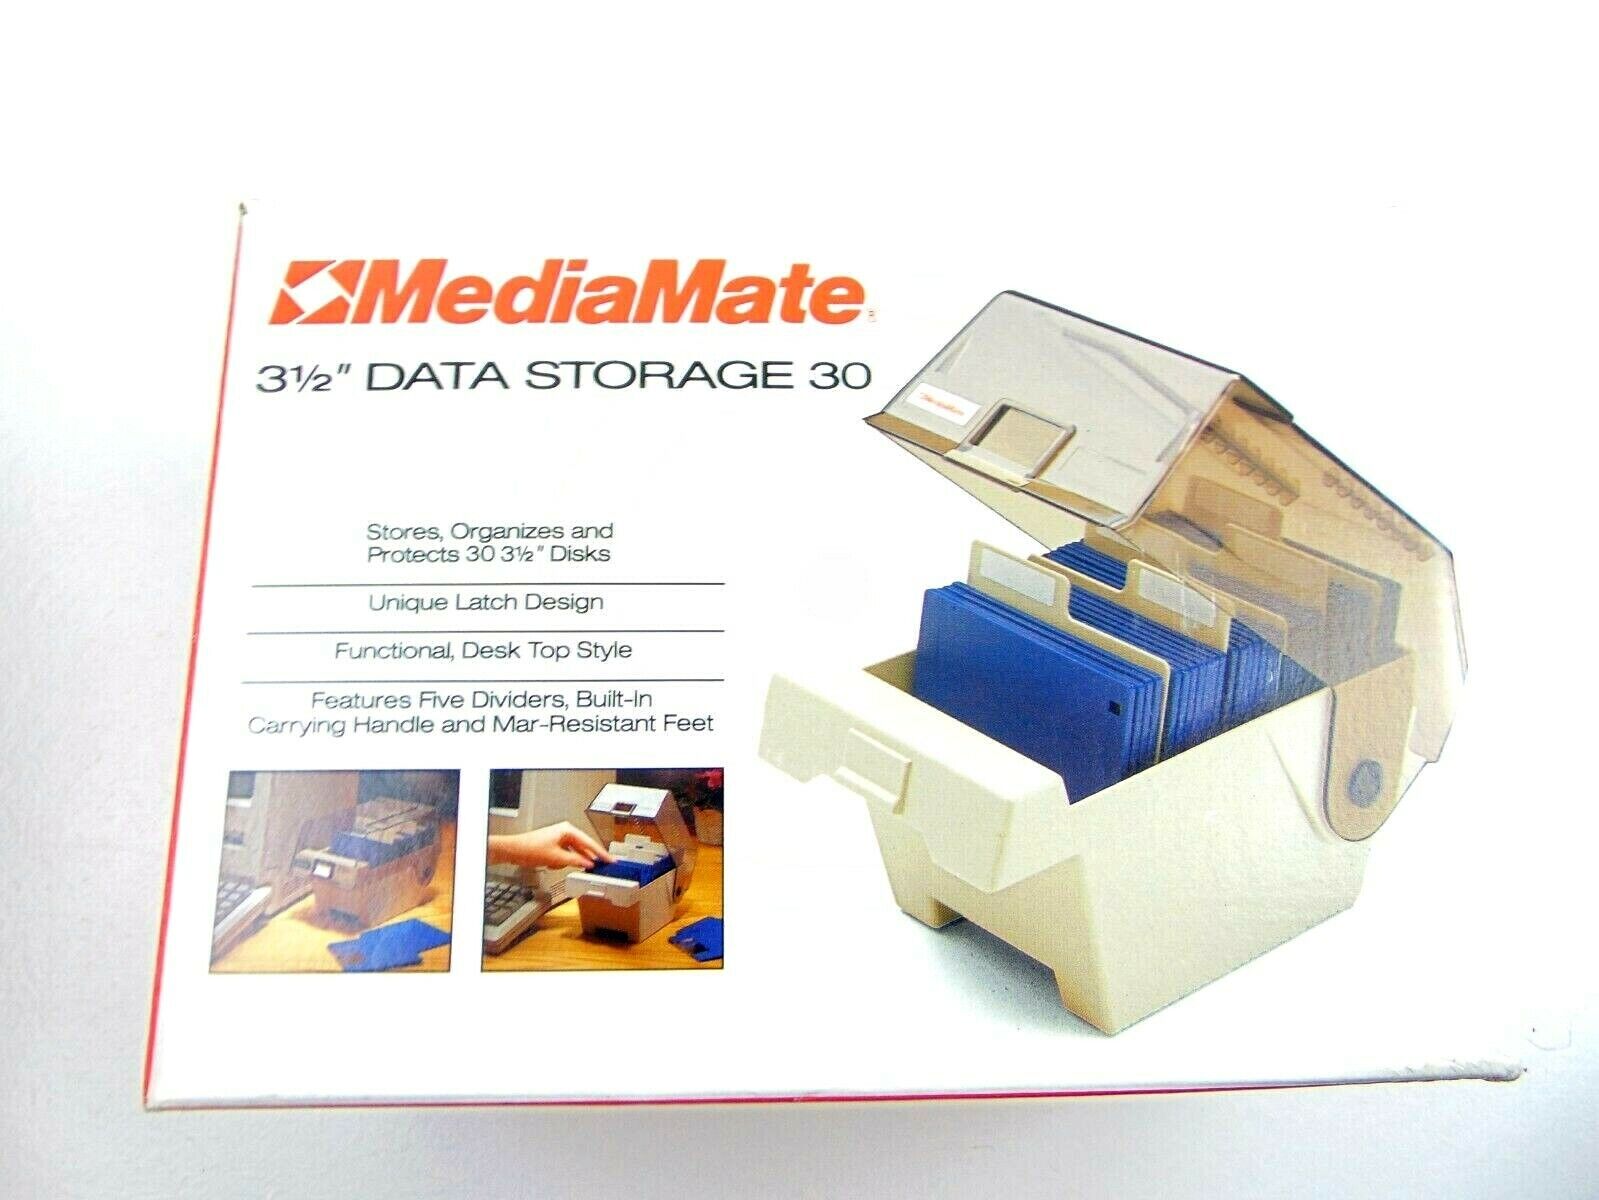 Media Mate 3 1/2 Inch Data Storage 30 new